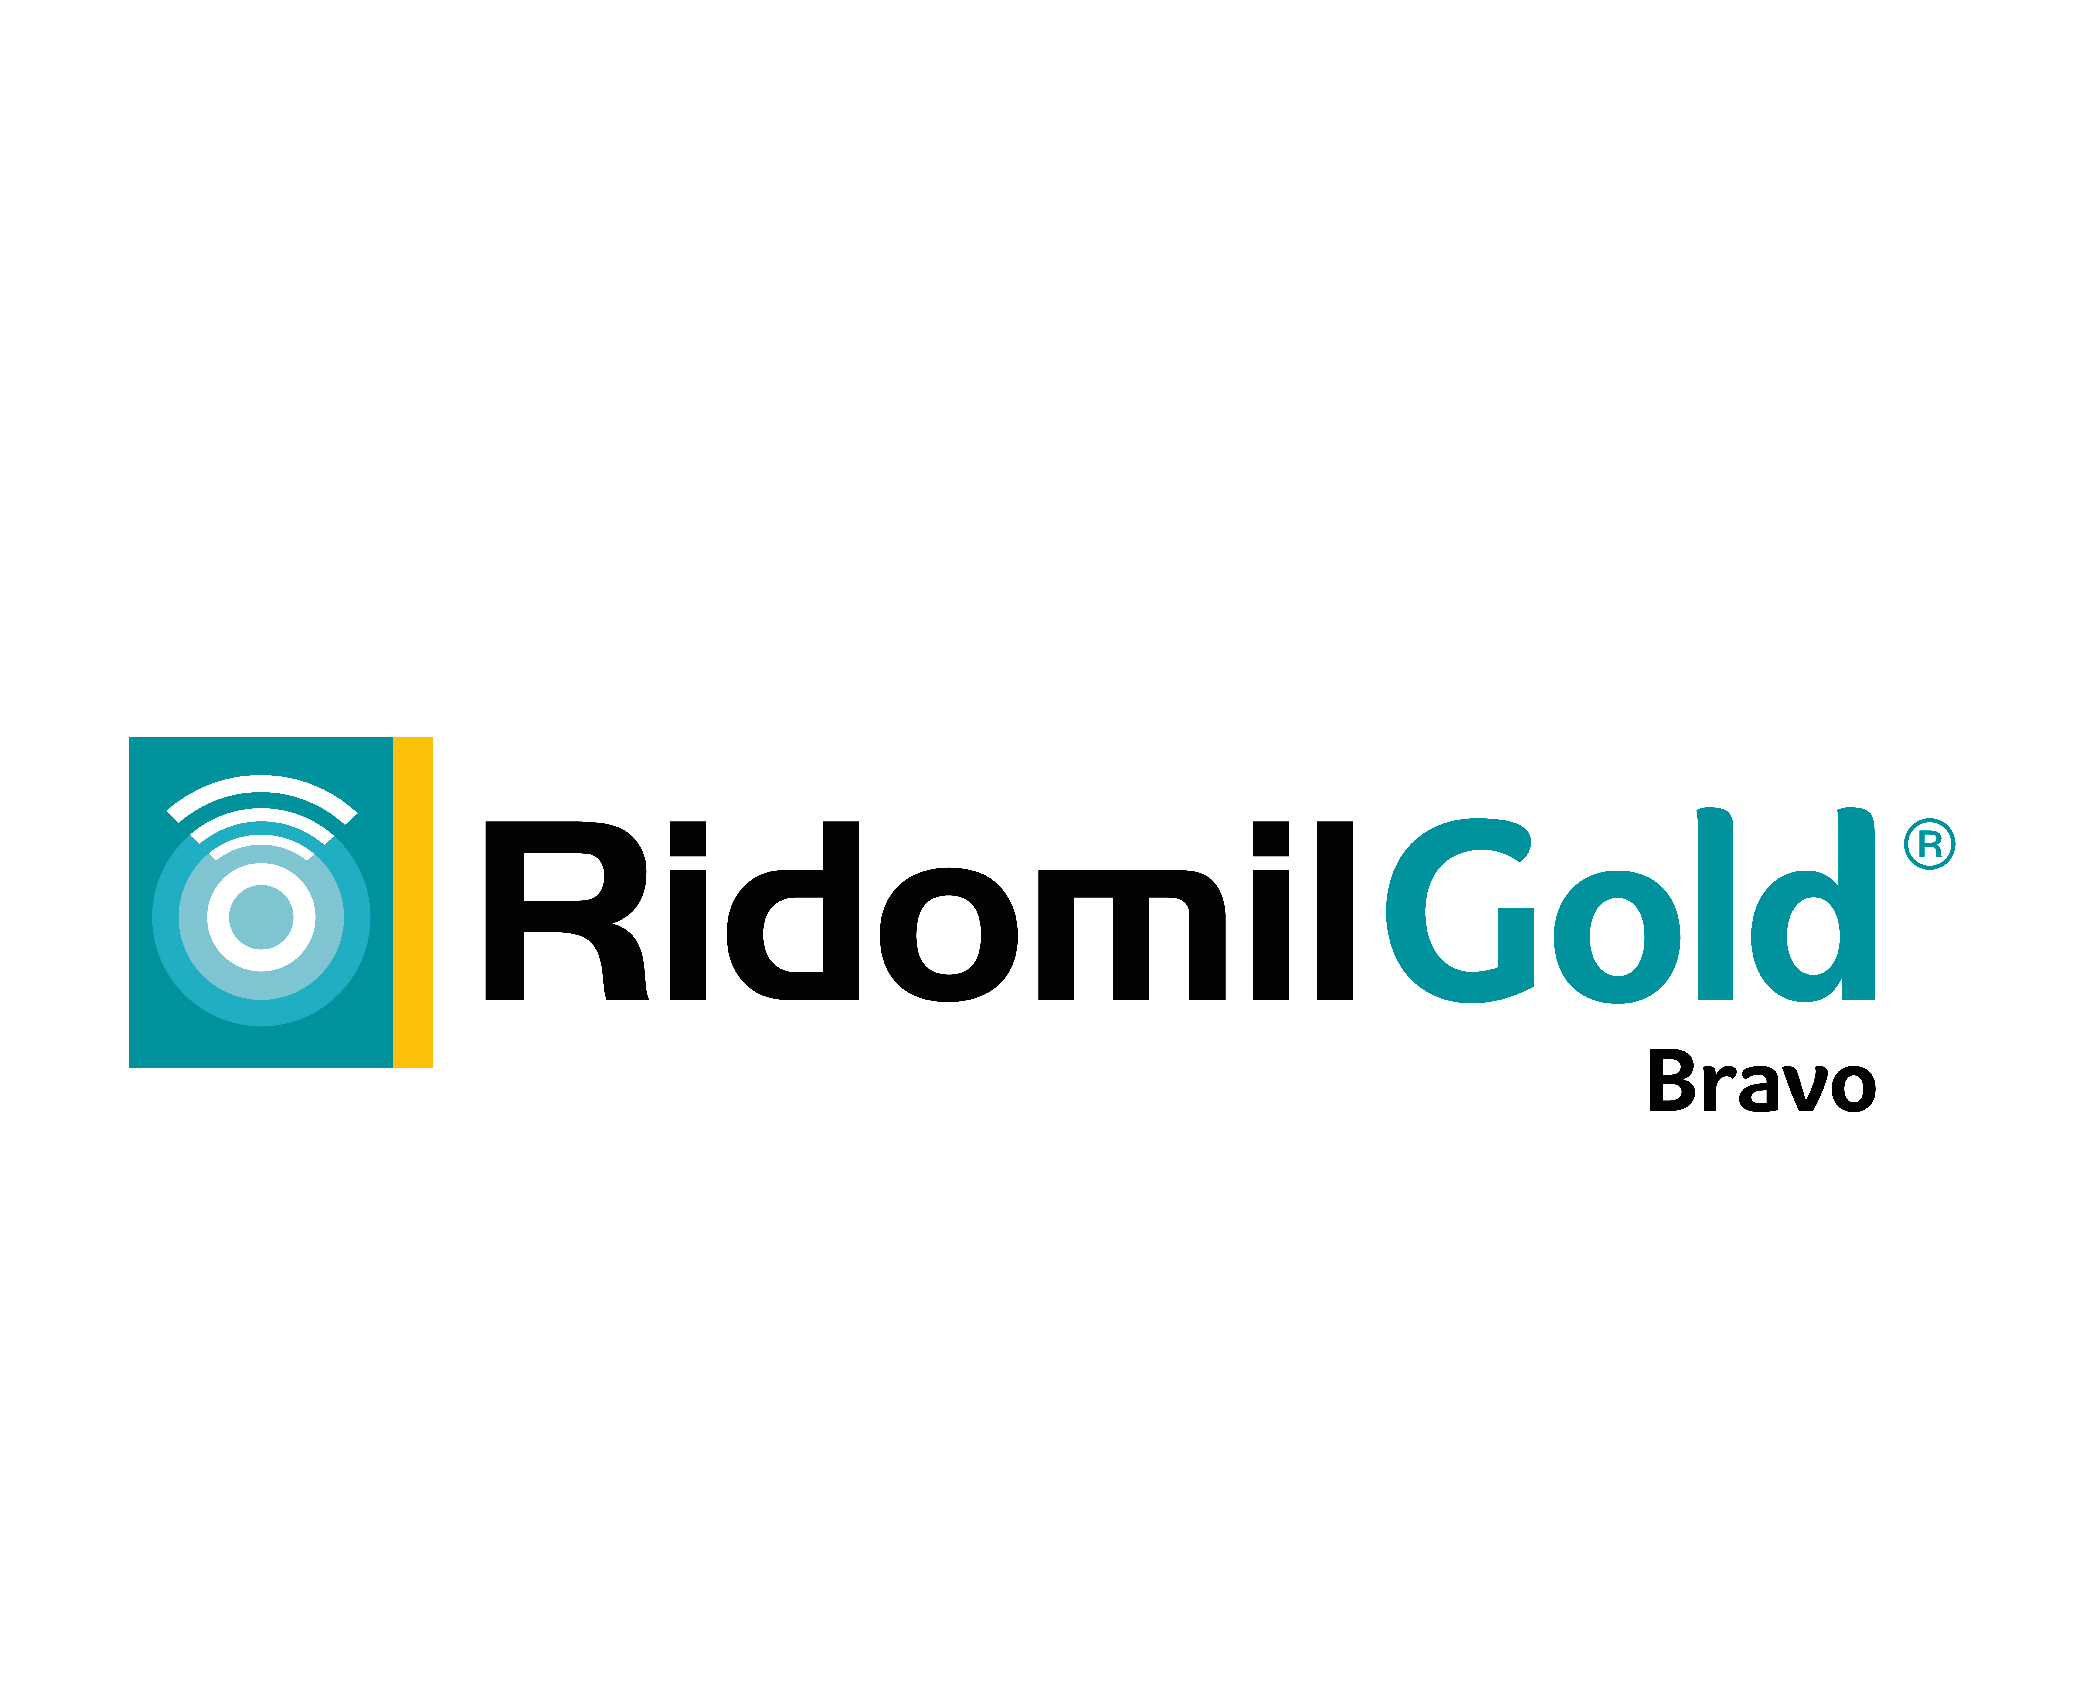 Ridomil Gold Bravo